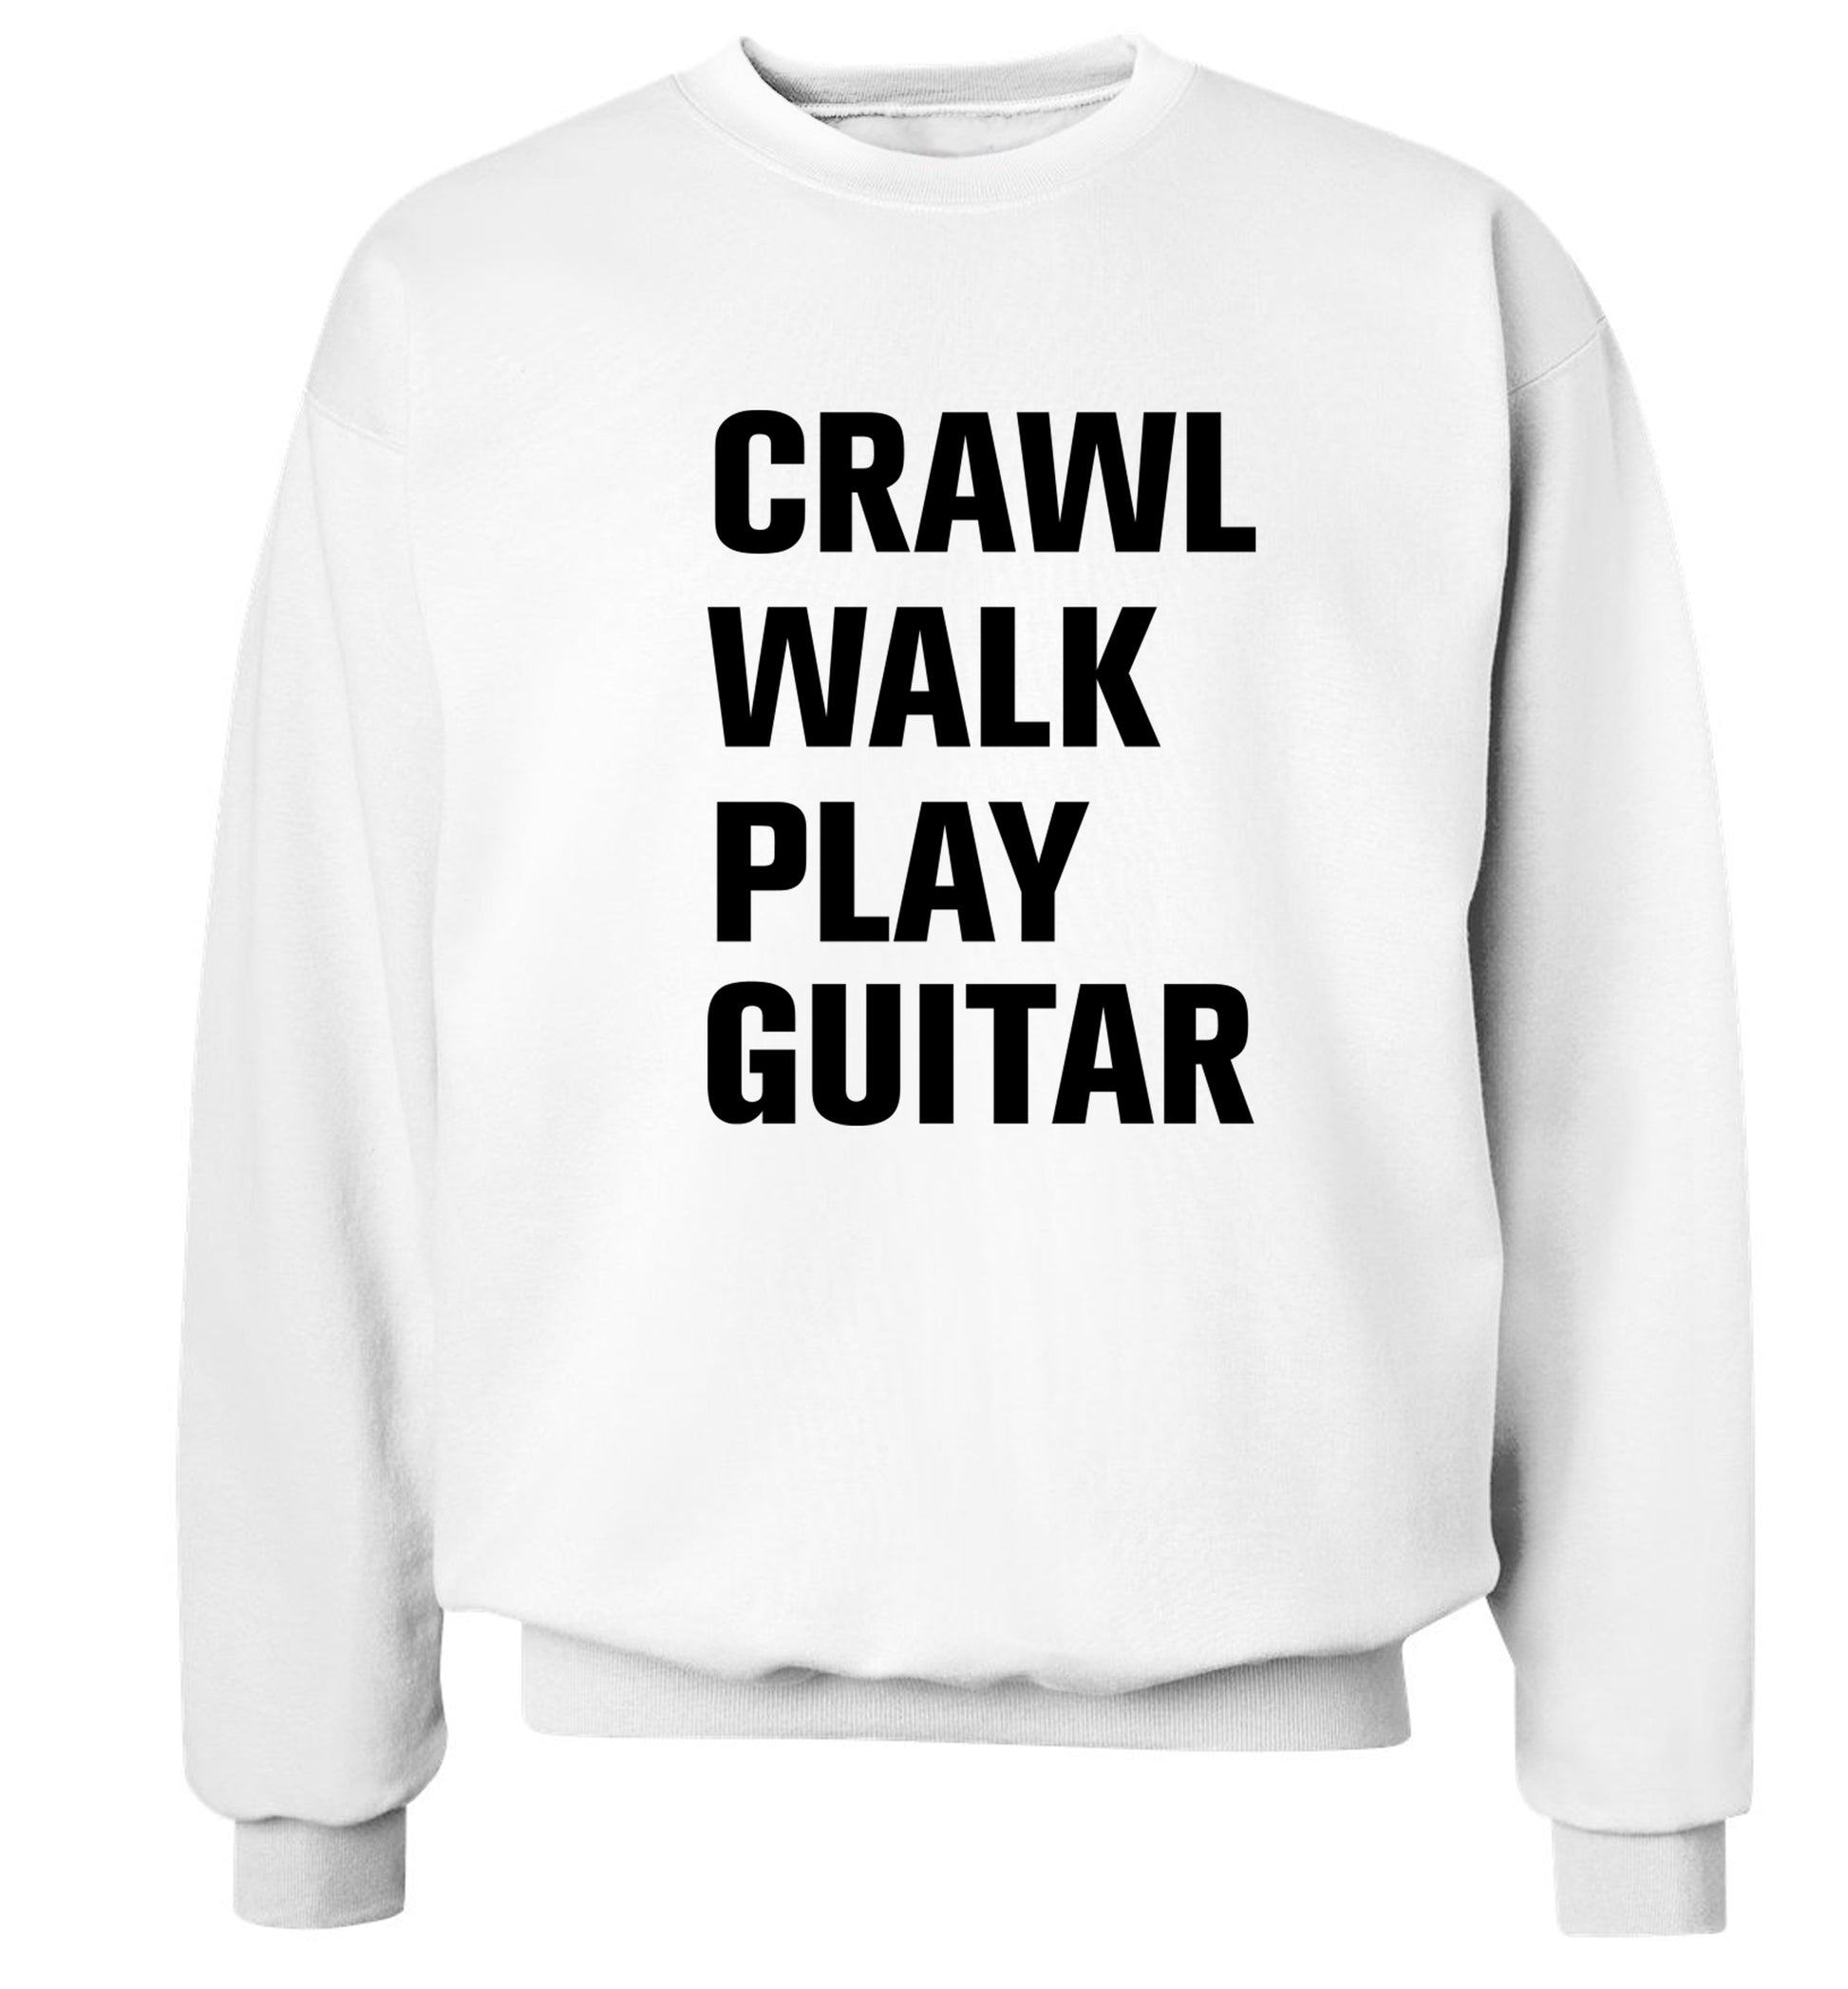 Crawl walk play guitar Adult's unisex white Sweater 2XL